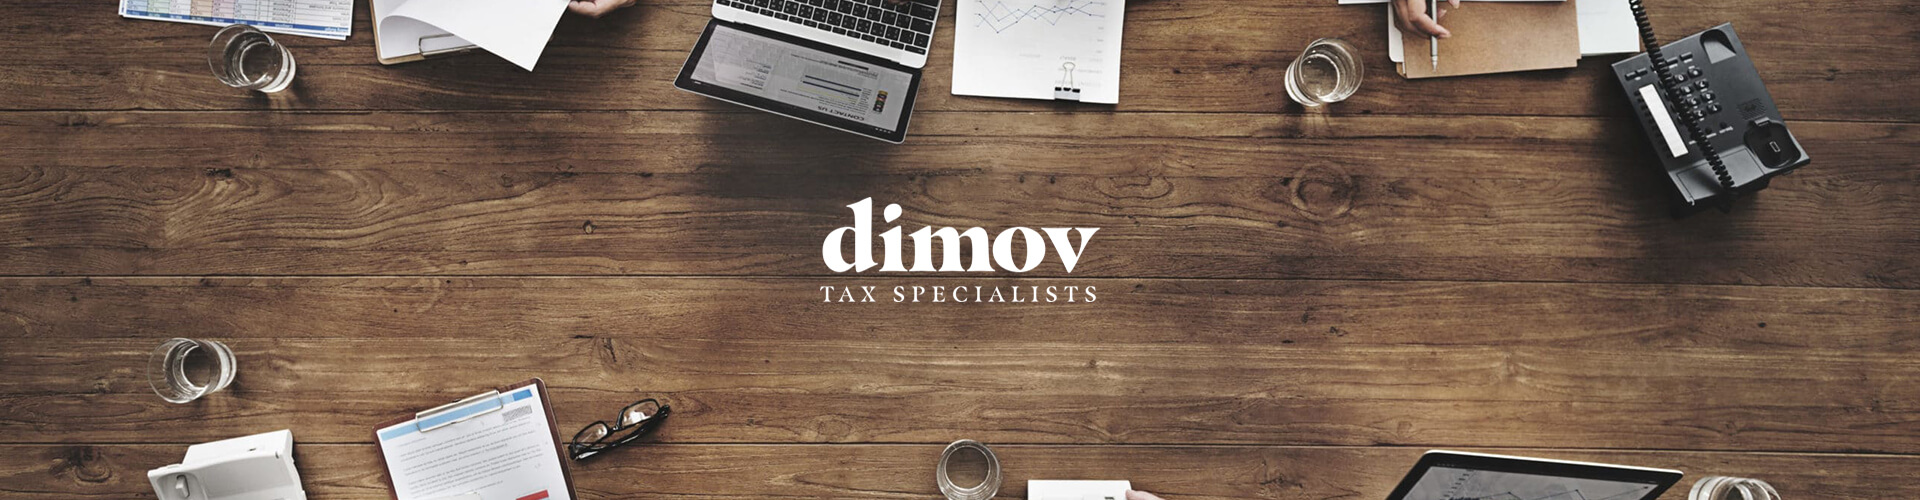 Case Study - Dimov Tax